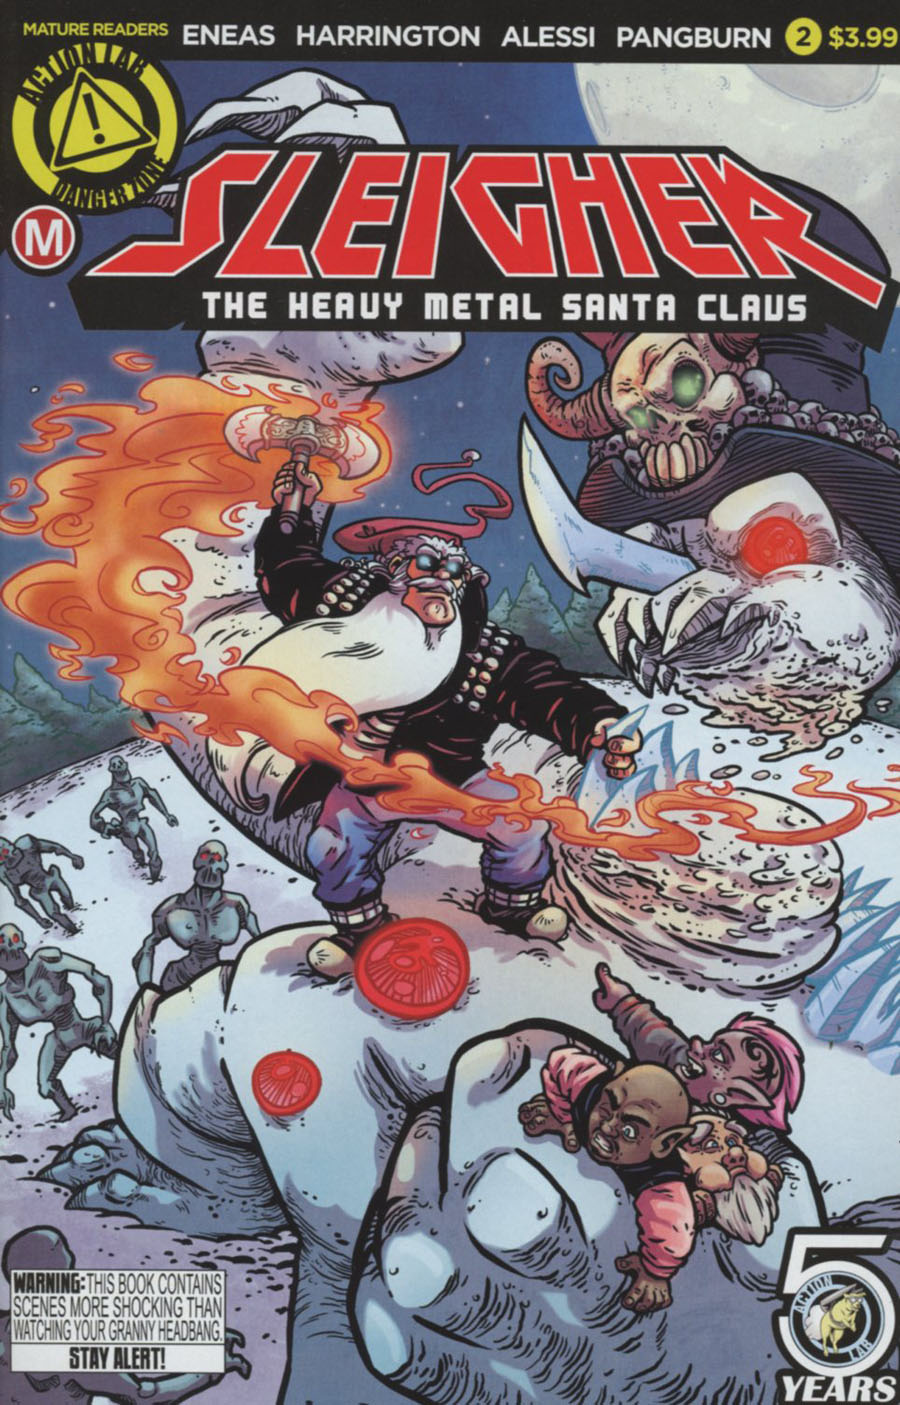 Sleigher Heavy Metal Santa Claus #2 Cover A Regular Axur Eneas Cover